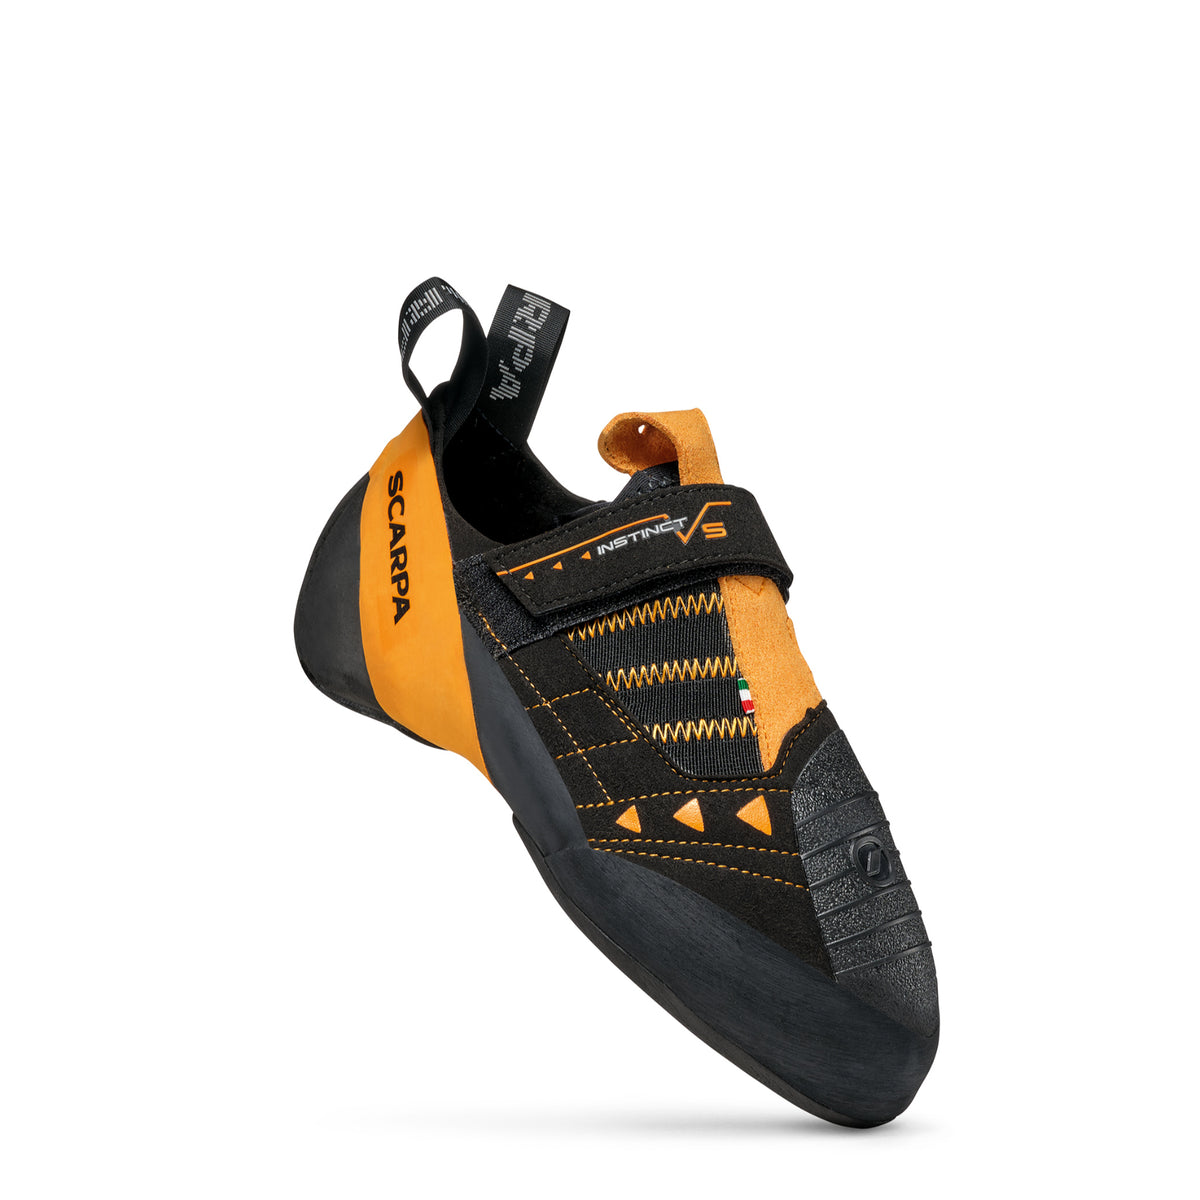 Scarpa Instinct VS climbing shoe in black/orange. side view